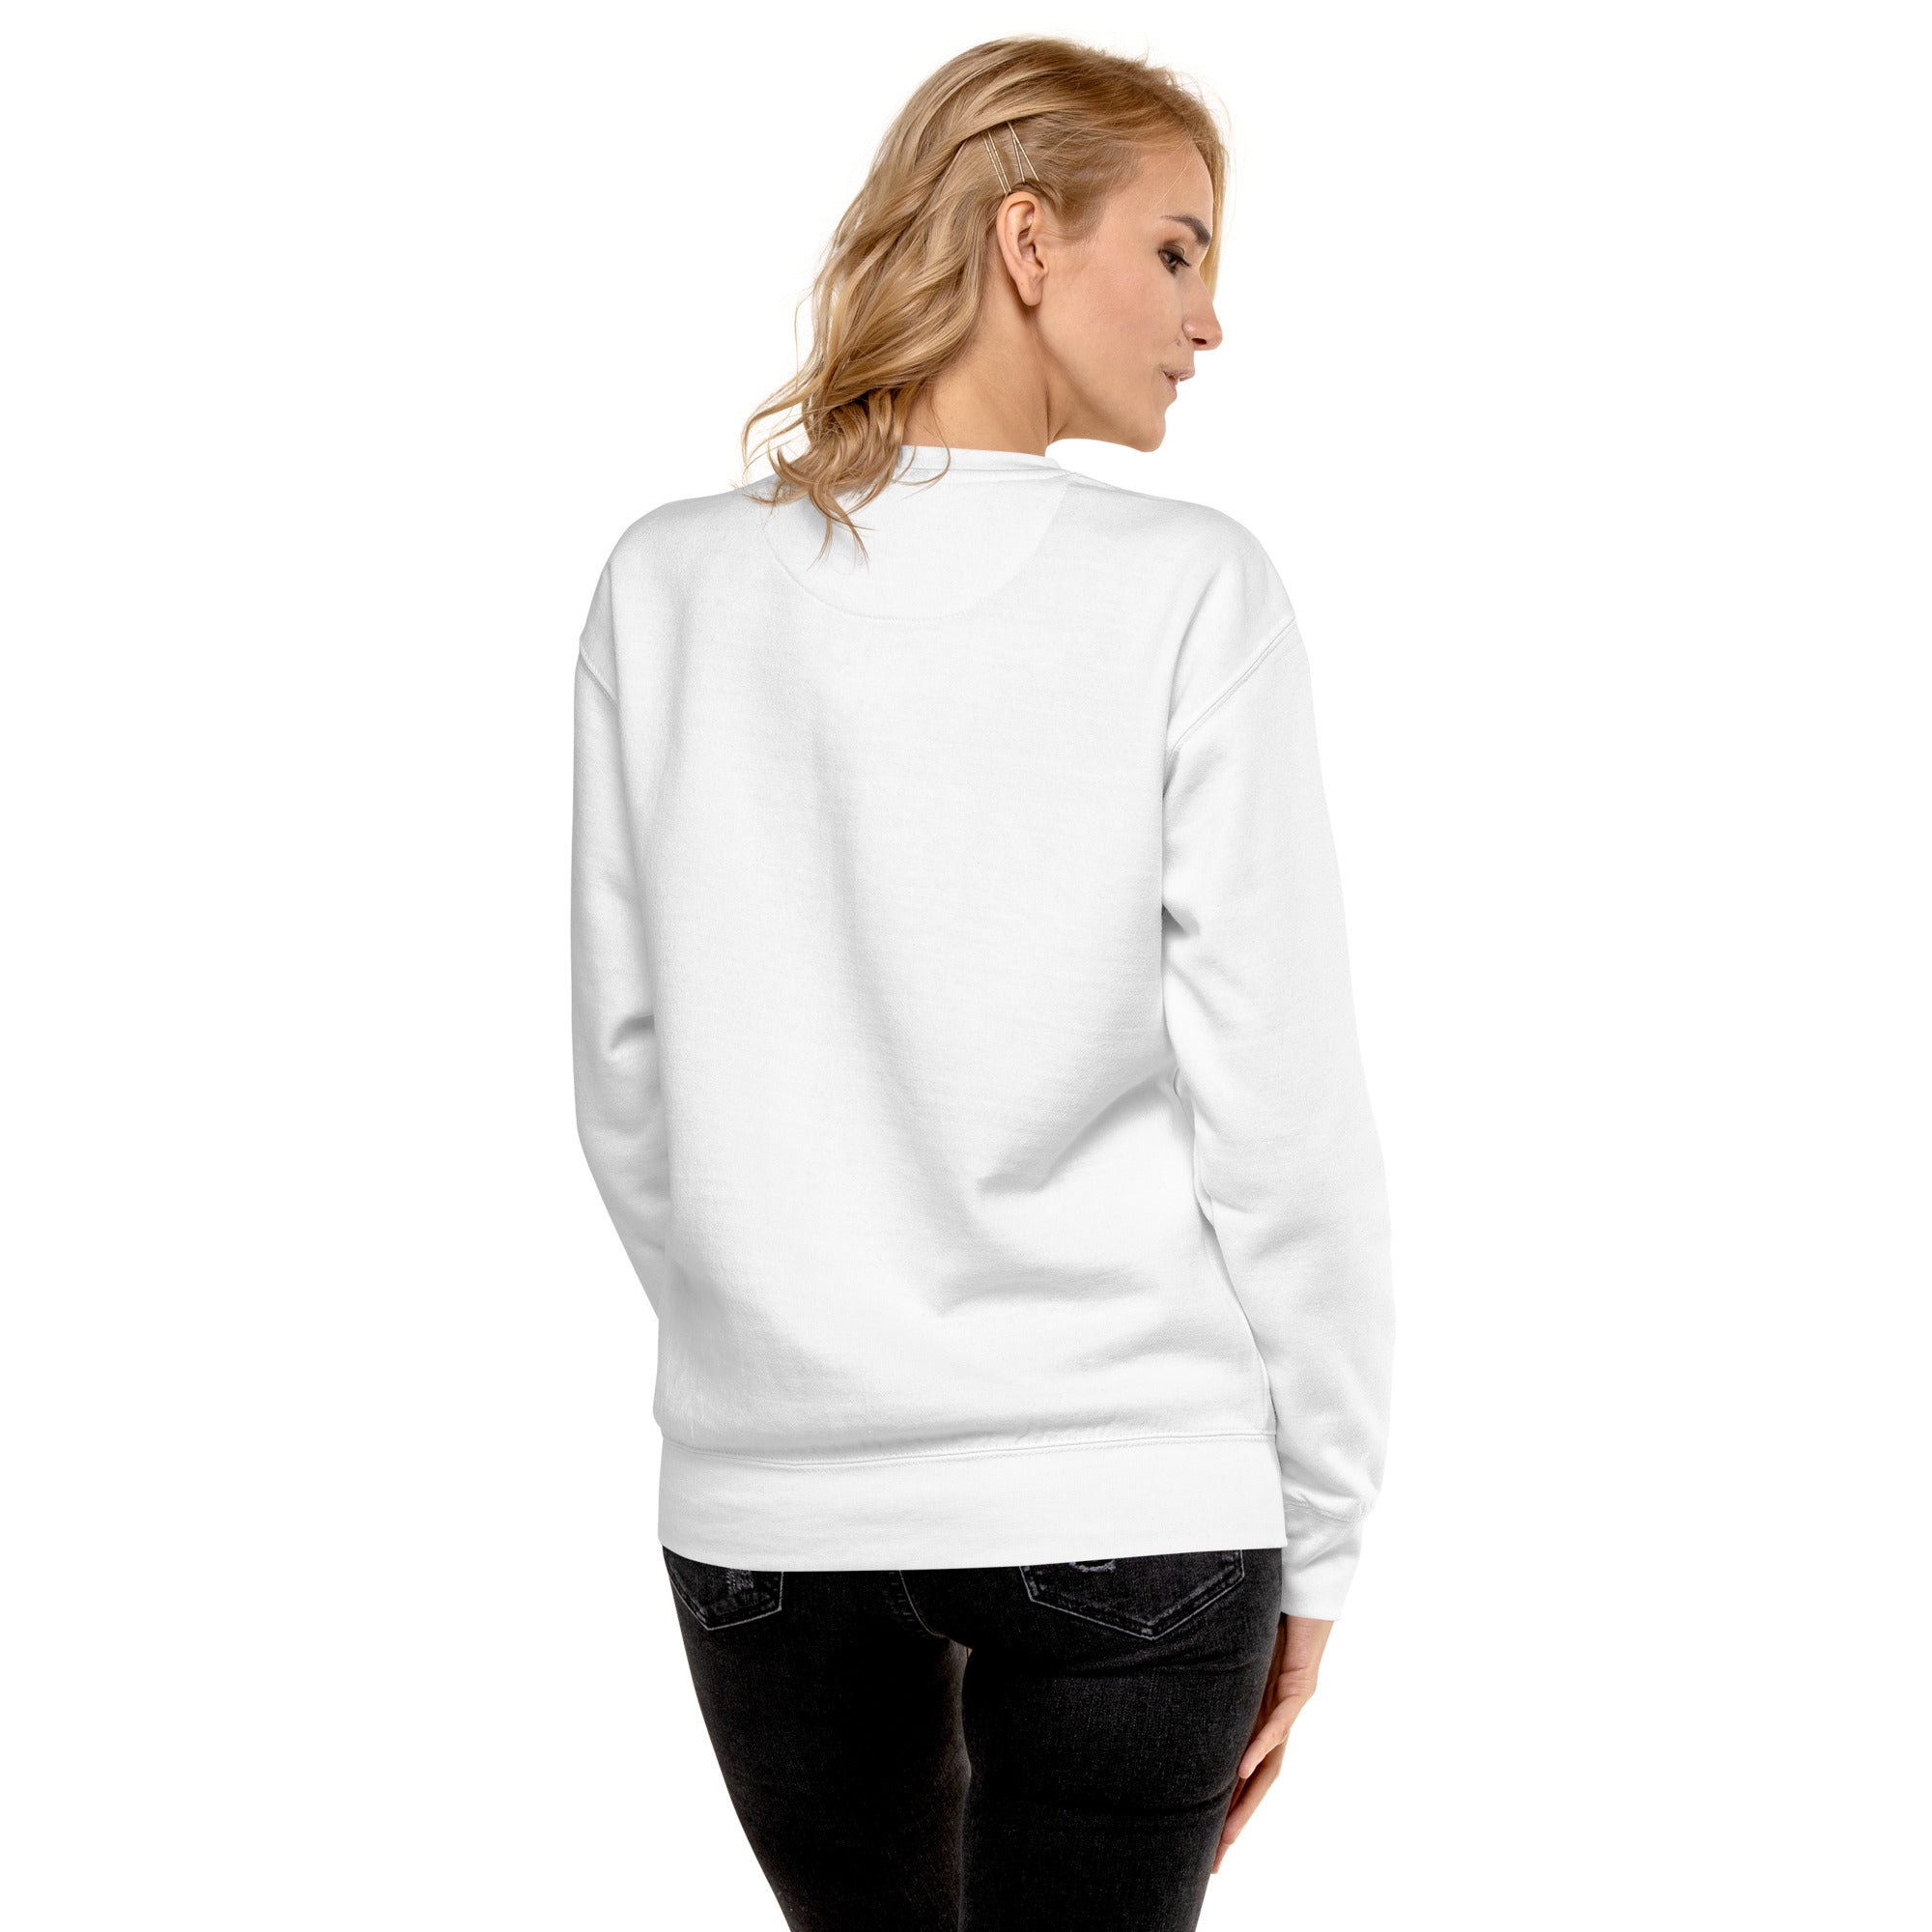 'King & I' Unisex Premium Sweatshirt